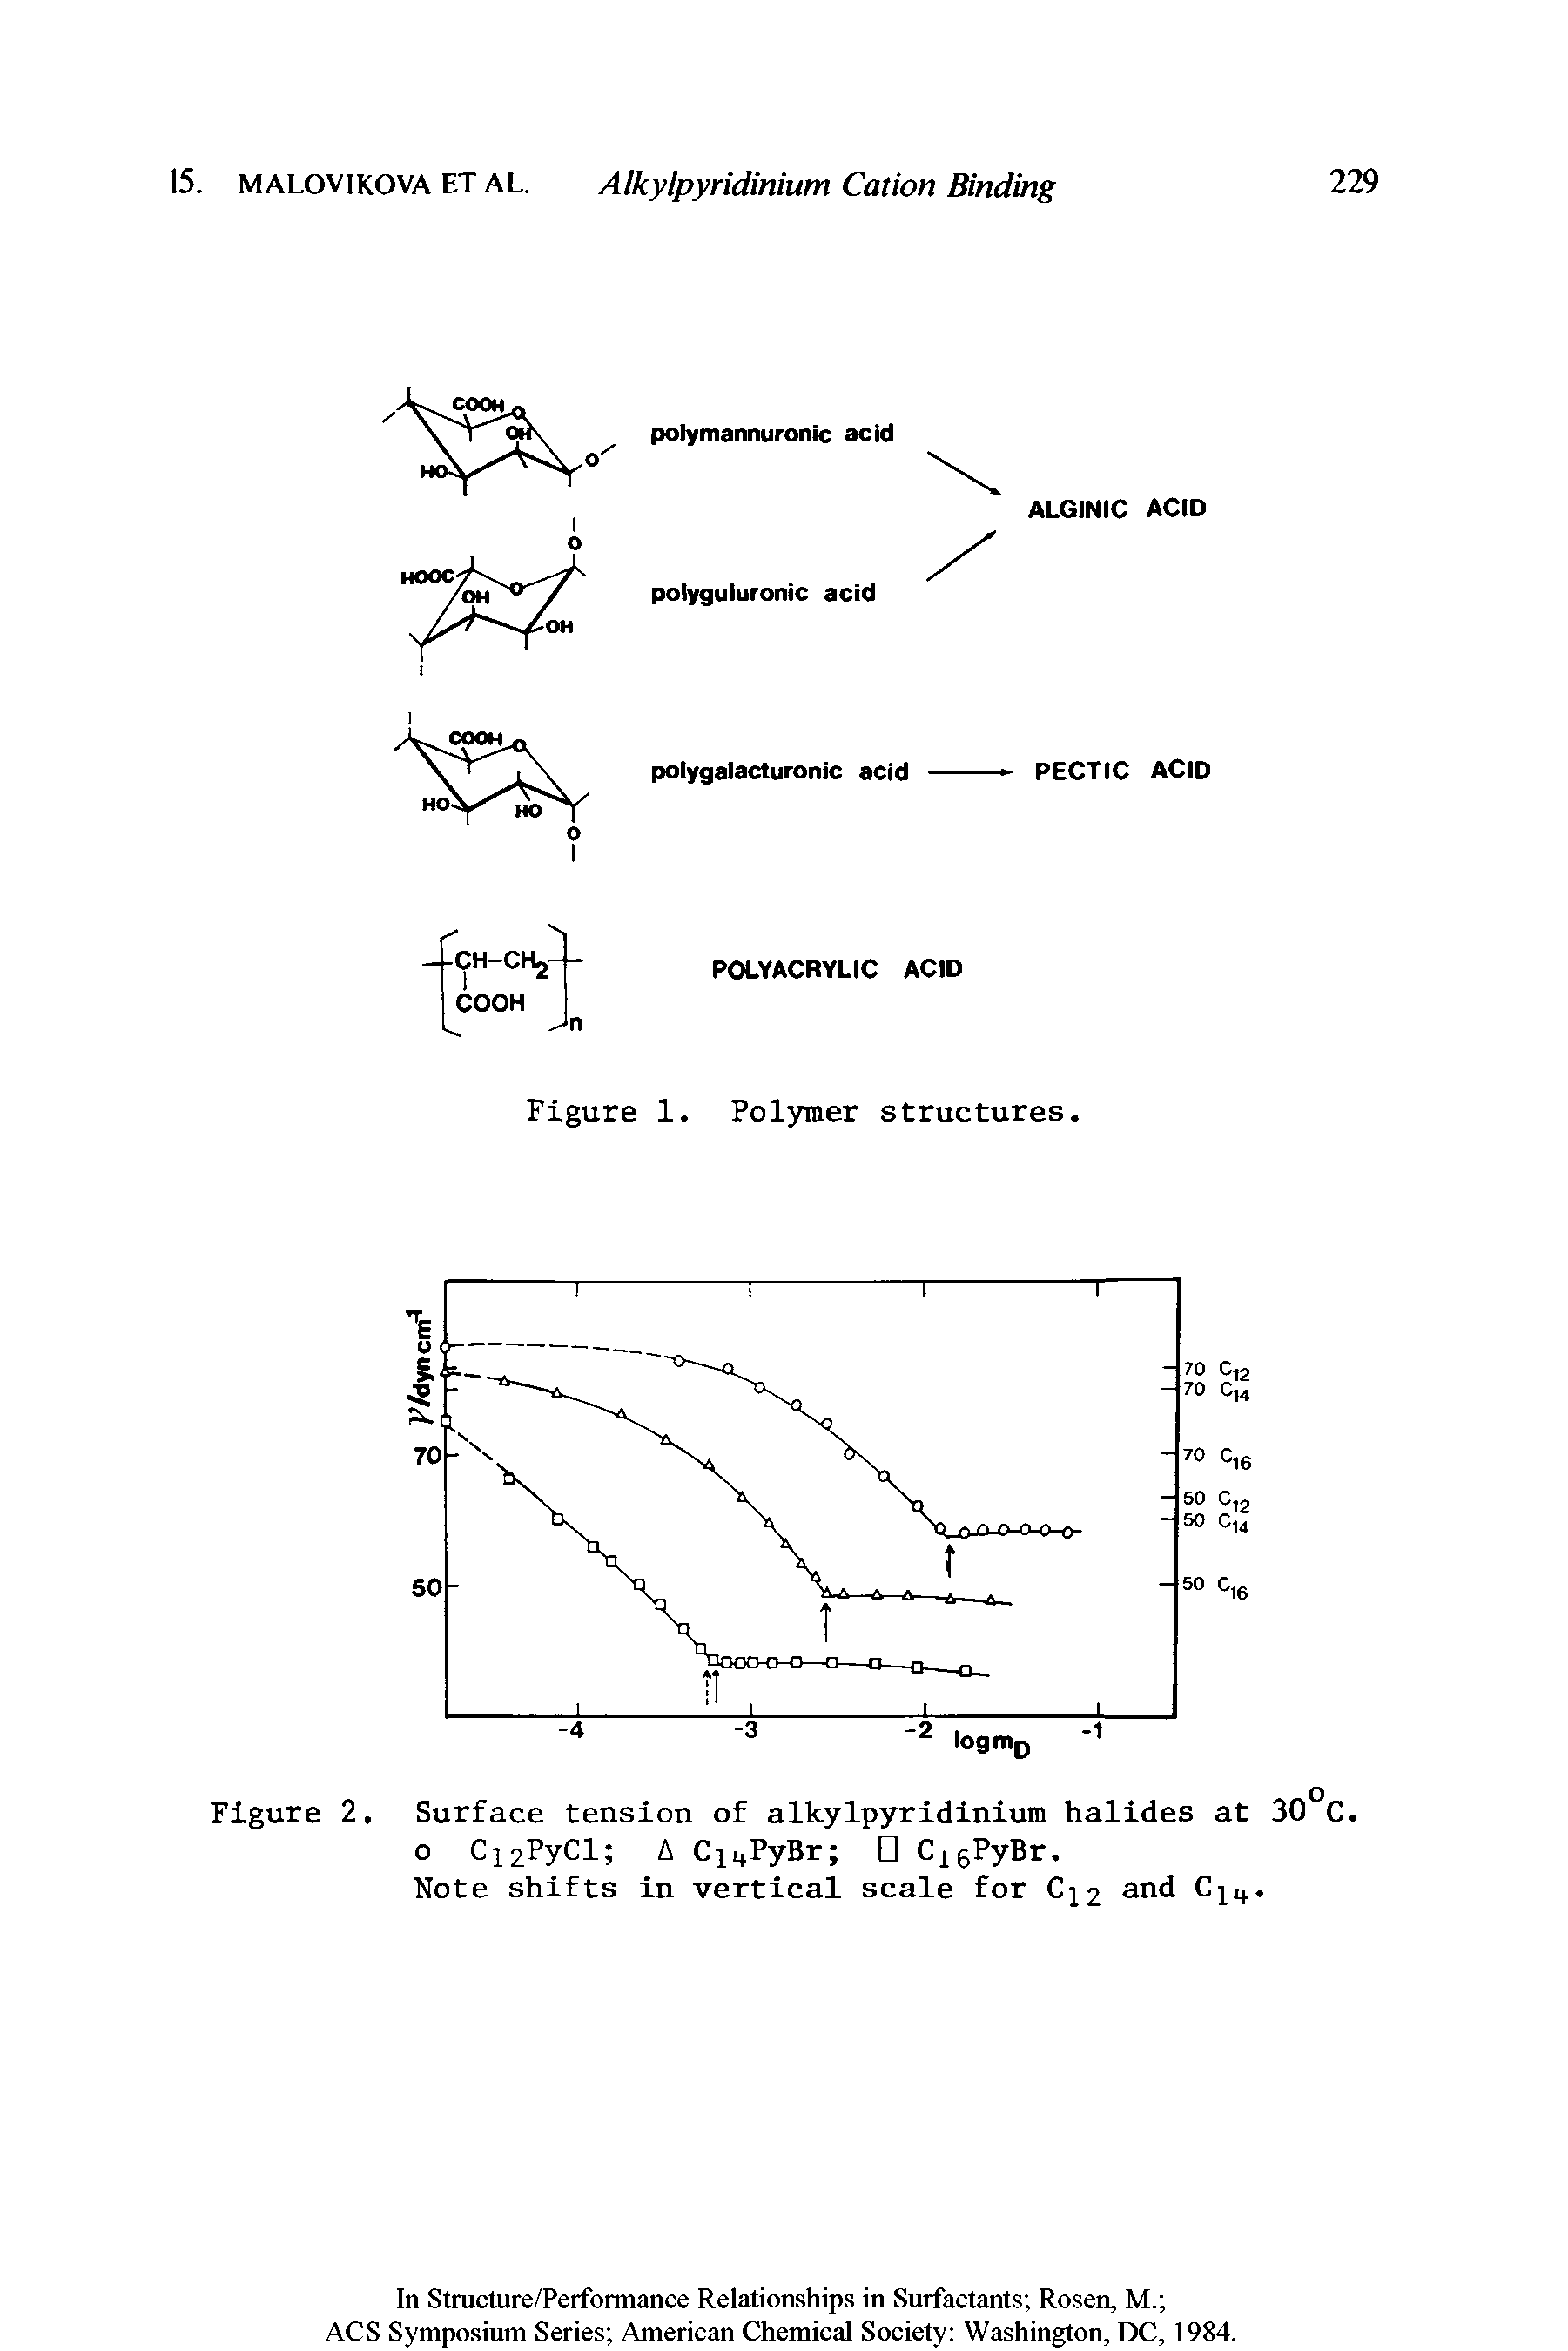 Figure 2, Surface tension of alkylpyridinium halides at 30°C. o Ci2PyCl A CmPyBr Cj gPyBr.